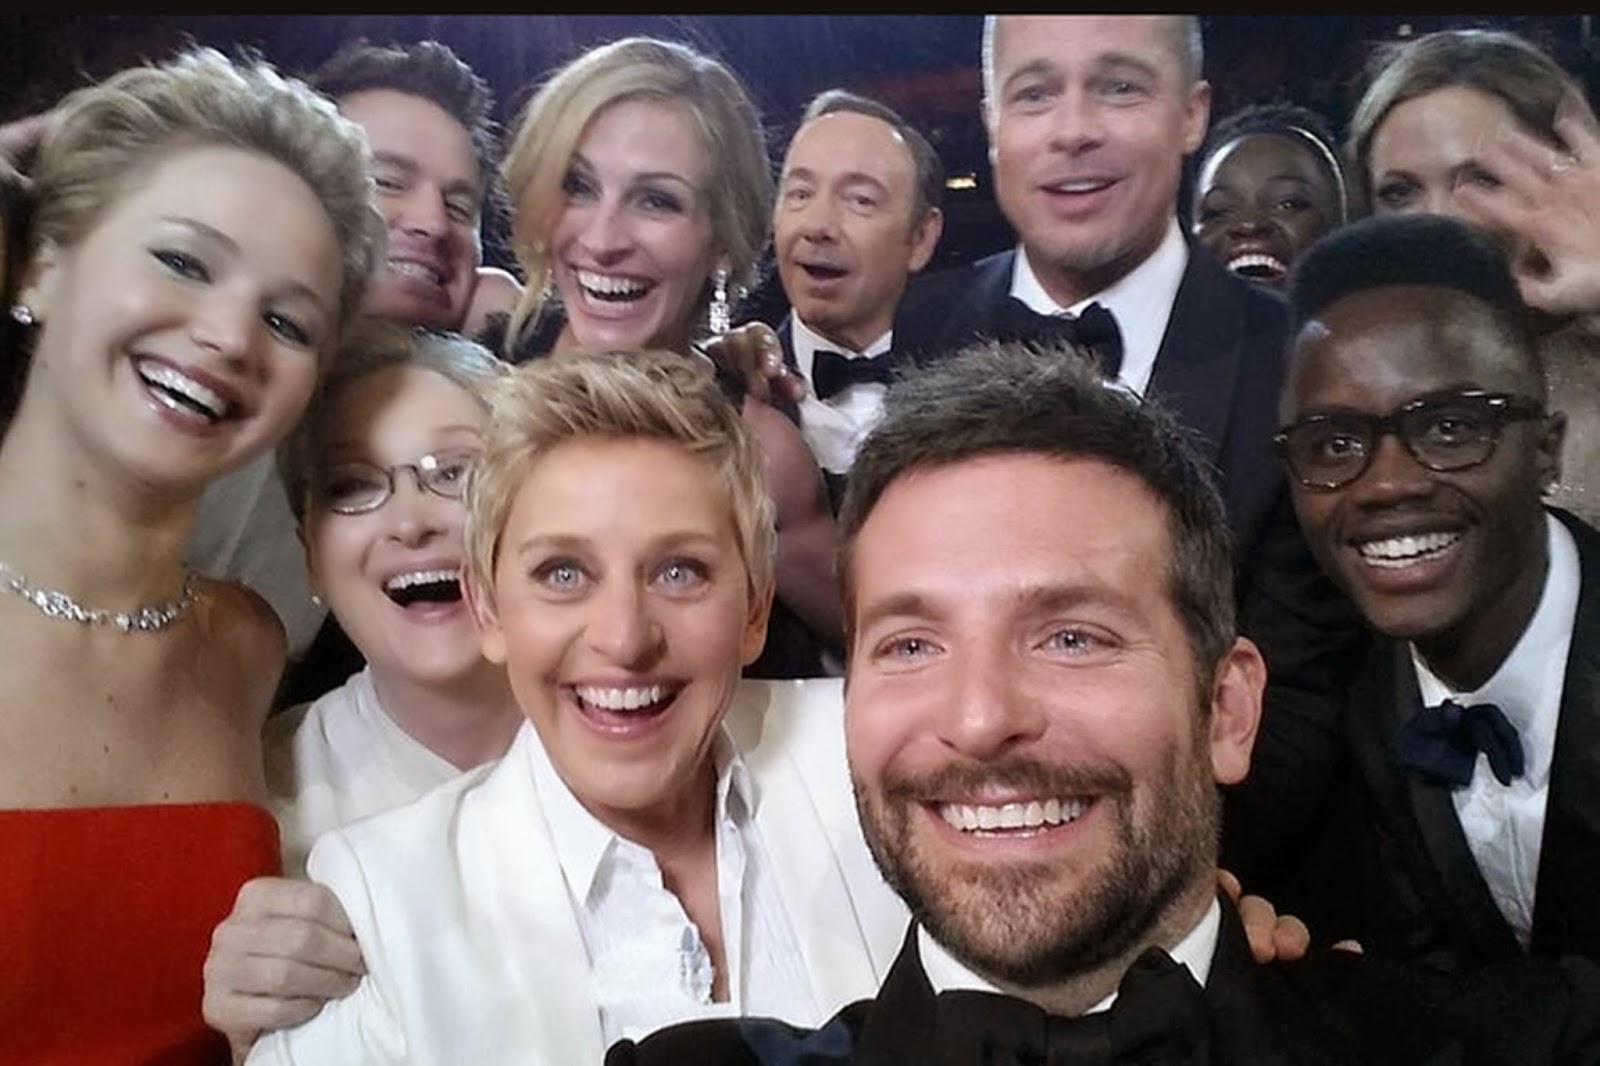 Ellen DeGeneres' Oscars 2014 'selfie' beats Obama pic for most re-tweeted